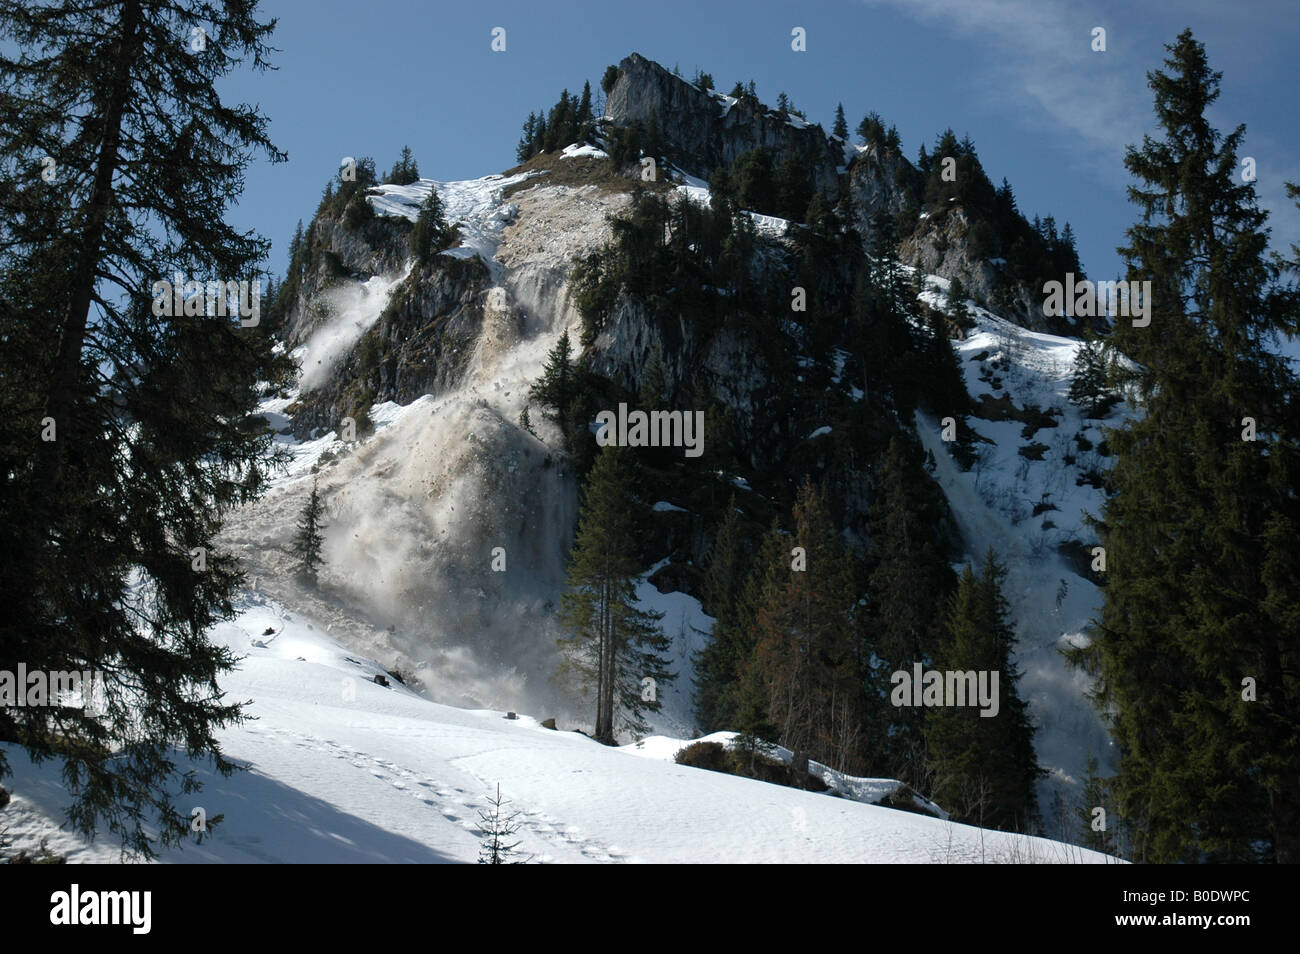 La molla di valanghe di neve bagnata standflue Berner Oberland Alpi della Svizzera alpina svizzera slitta da neve Foto Stock